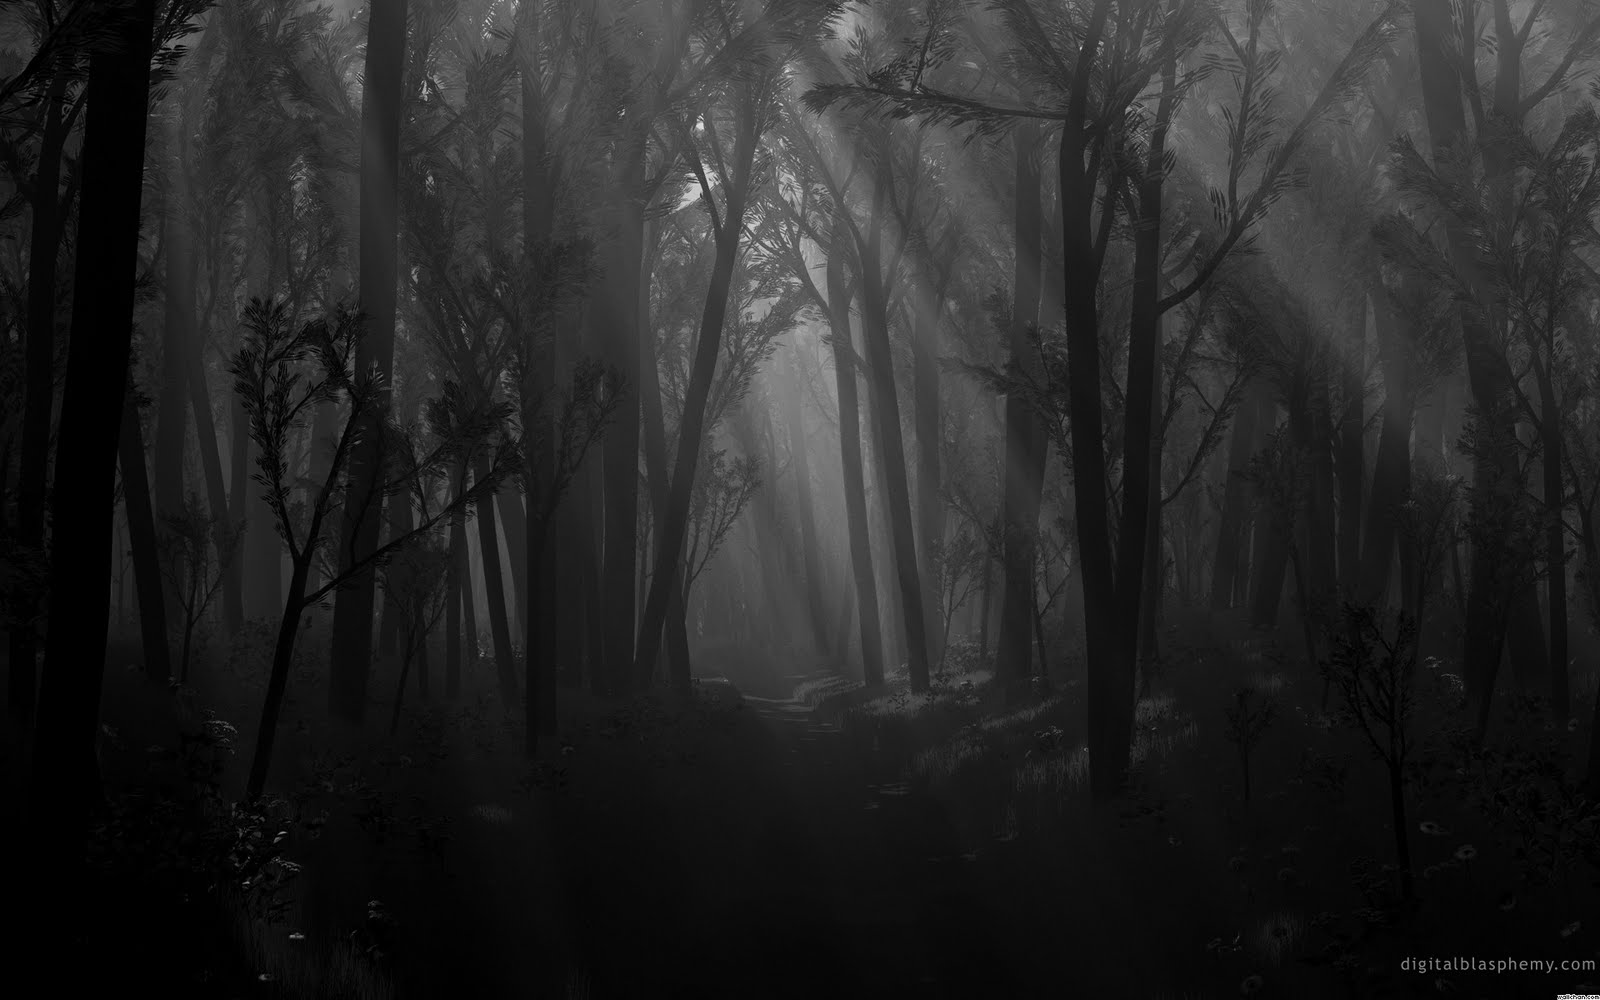   dark forest path shadows spooky monochrome wallpaper wallpaperjpg 1600x1000